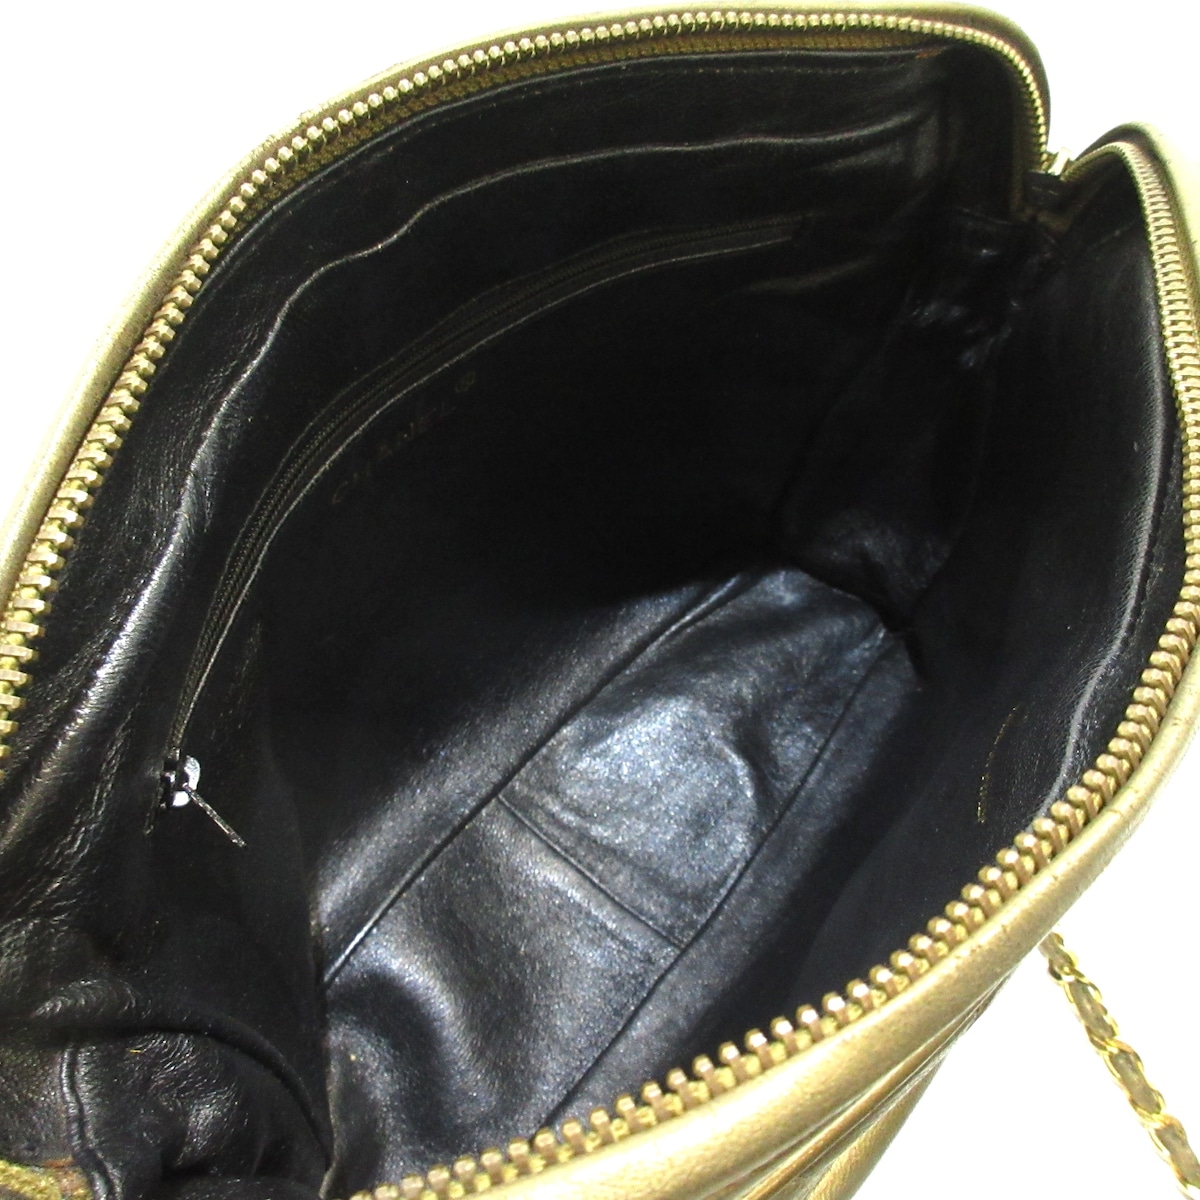 Chanel Khaki Leather CC Tassle Camera Bag